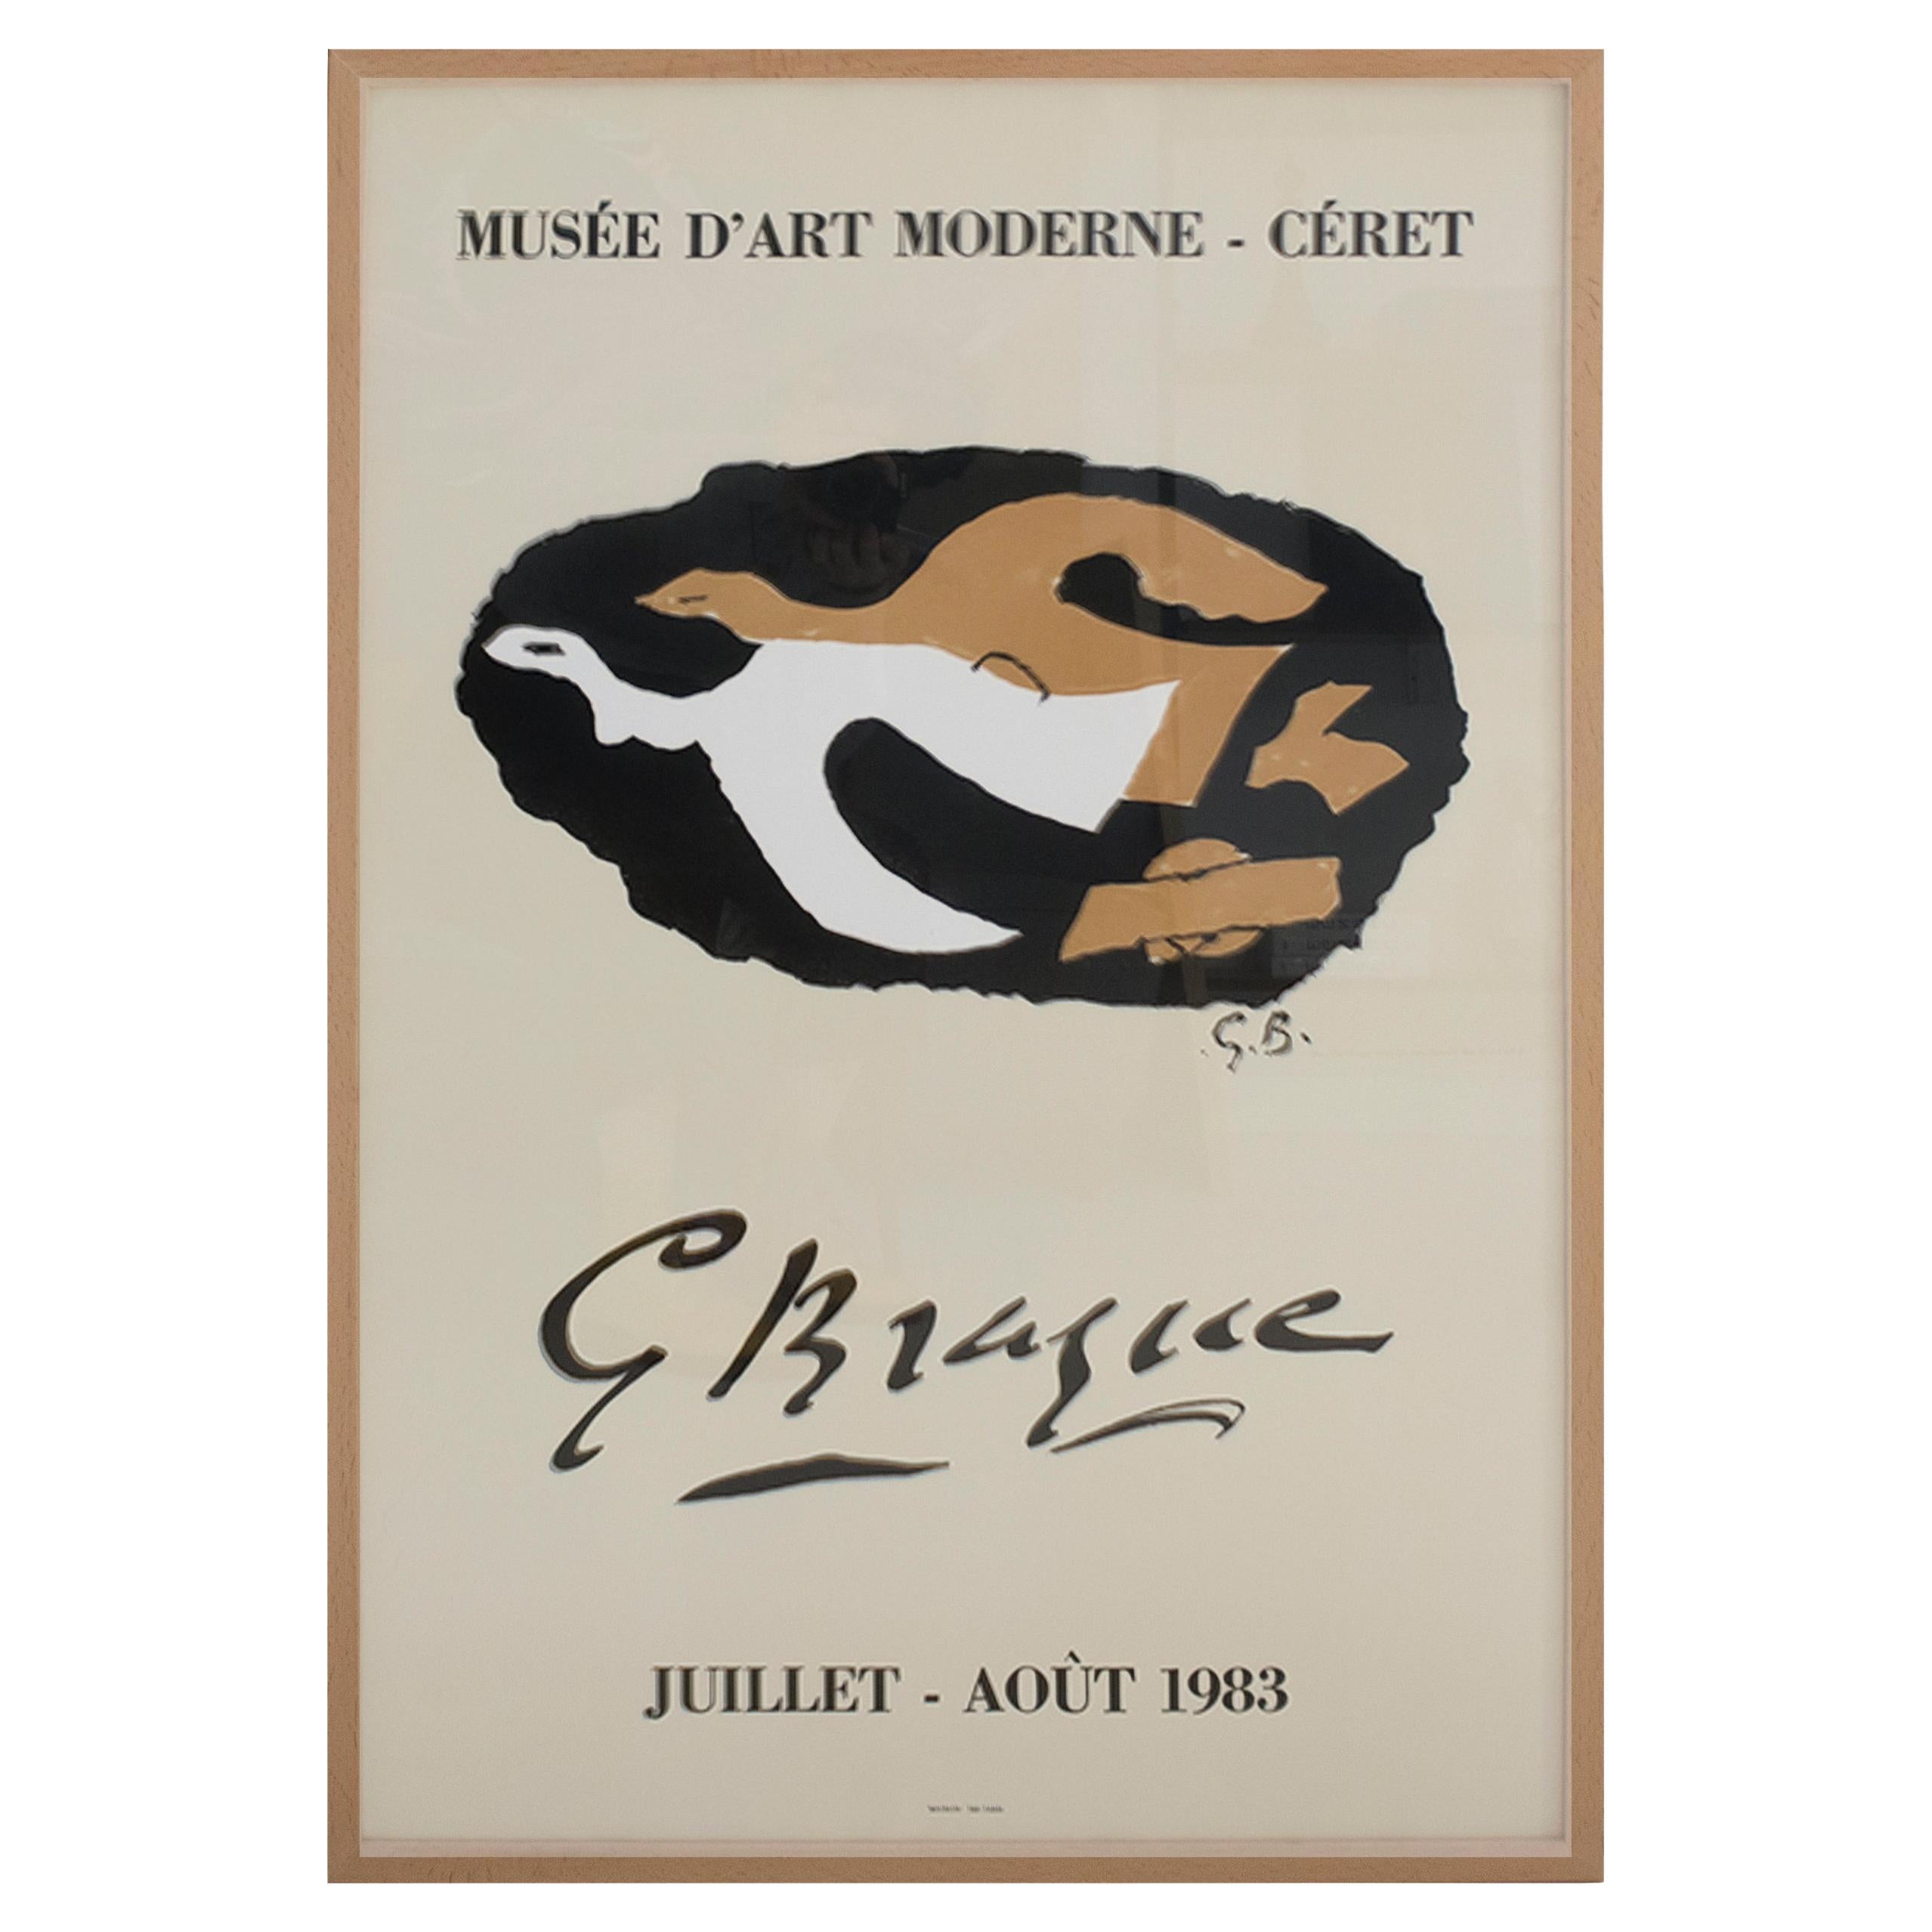 Lithograph Poster by Georges Braque, Musée D'art Moderne- Céret, France, 1983 For Sale